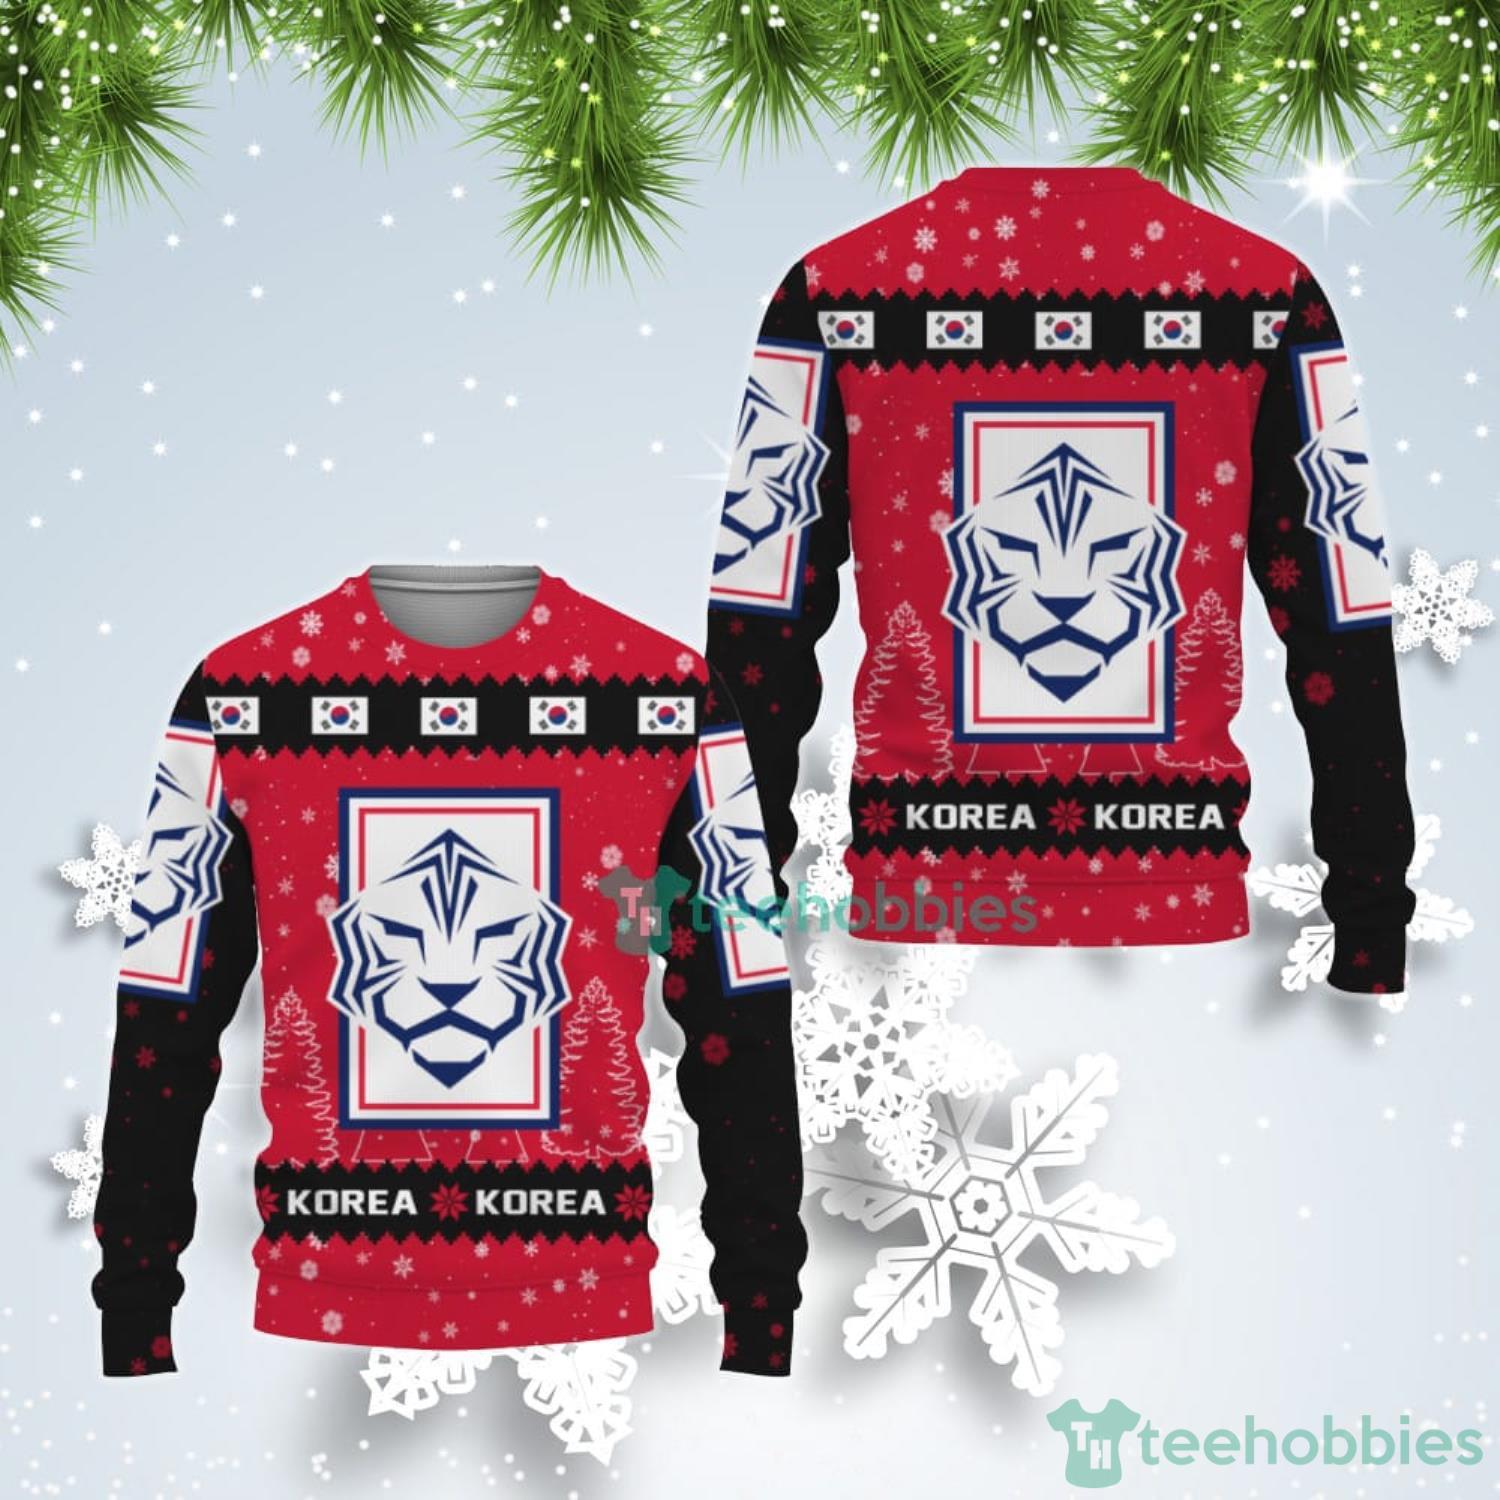 Korea Republic National Soccer Team Qatar World Cup 2022 Winter Season Ugly Christmas Sweater Product Photo 1